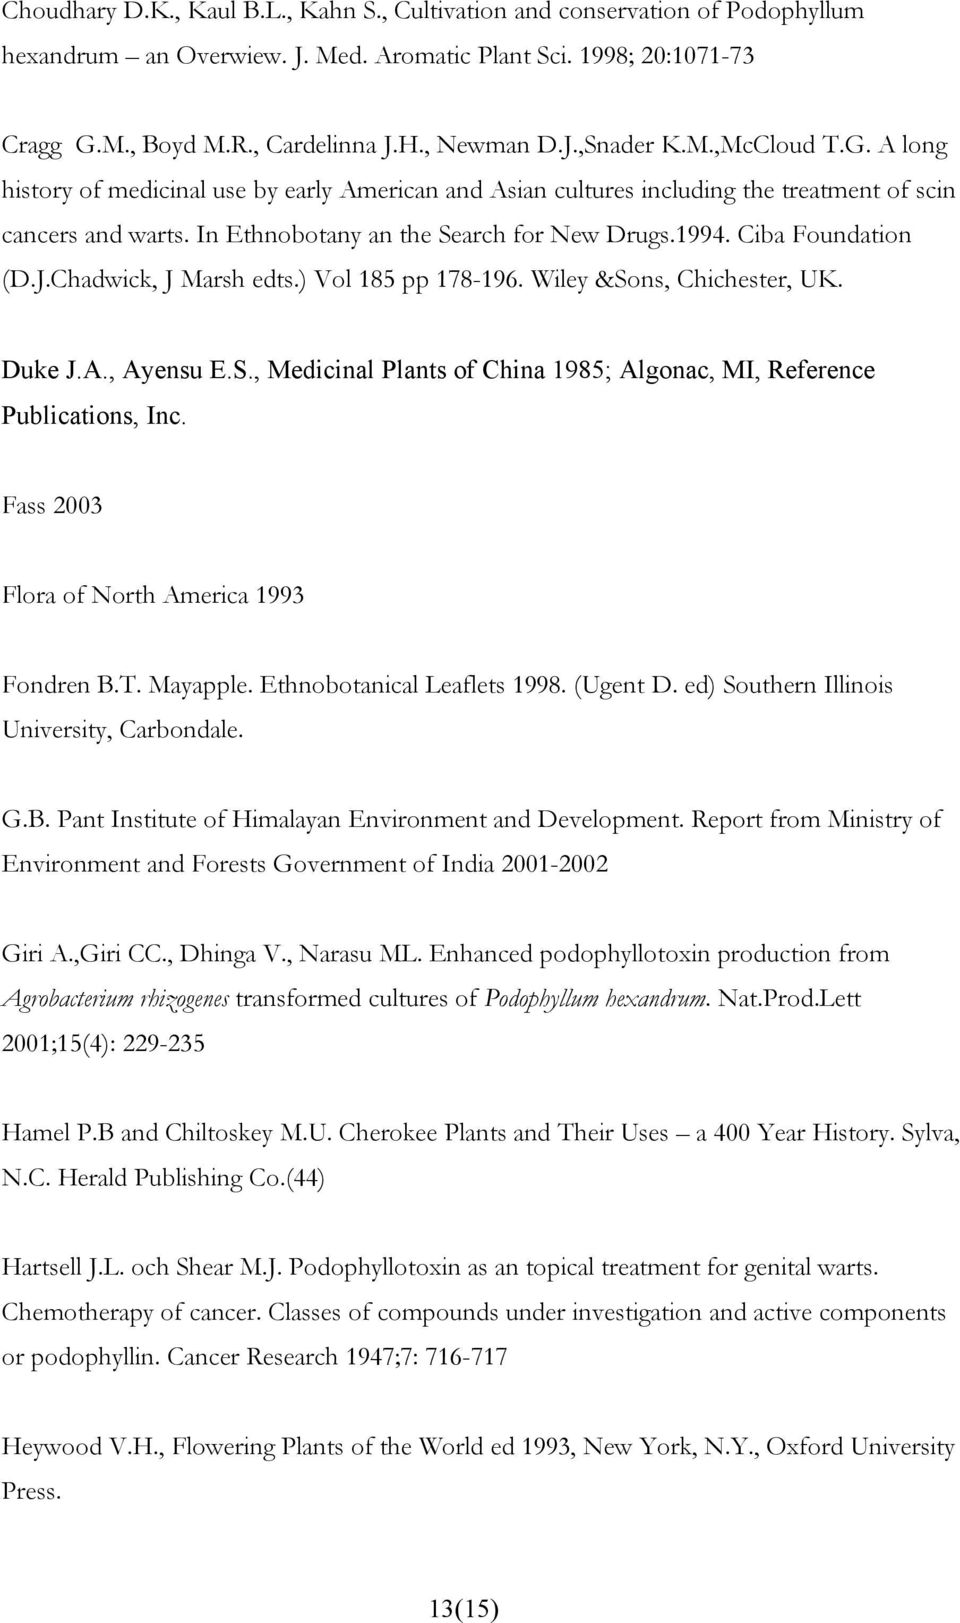 Ciba Foundation (D.J.Chadwick, J Marsh edts.) Vol 185 pp 178-196. Wiley &Sons, Chichester, UK. Duke J.A., Ayensu E.S., Medicinal Plants of China 1985; Algonac, MI, Reference Publications, Inc.